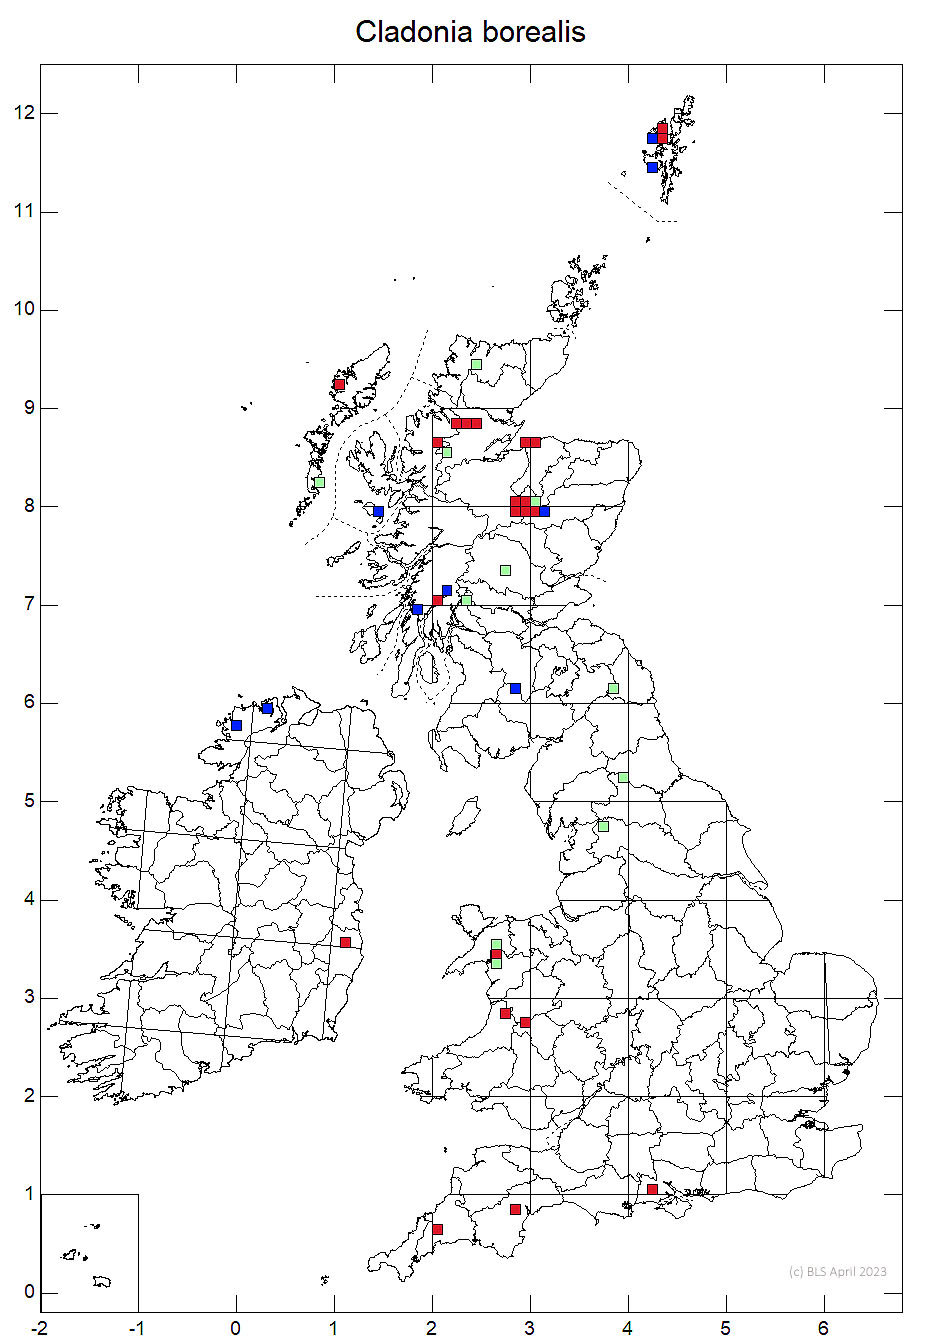 Cladonia borealis 10km sq distribution map